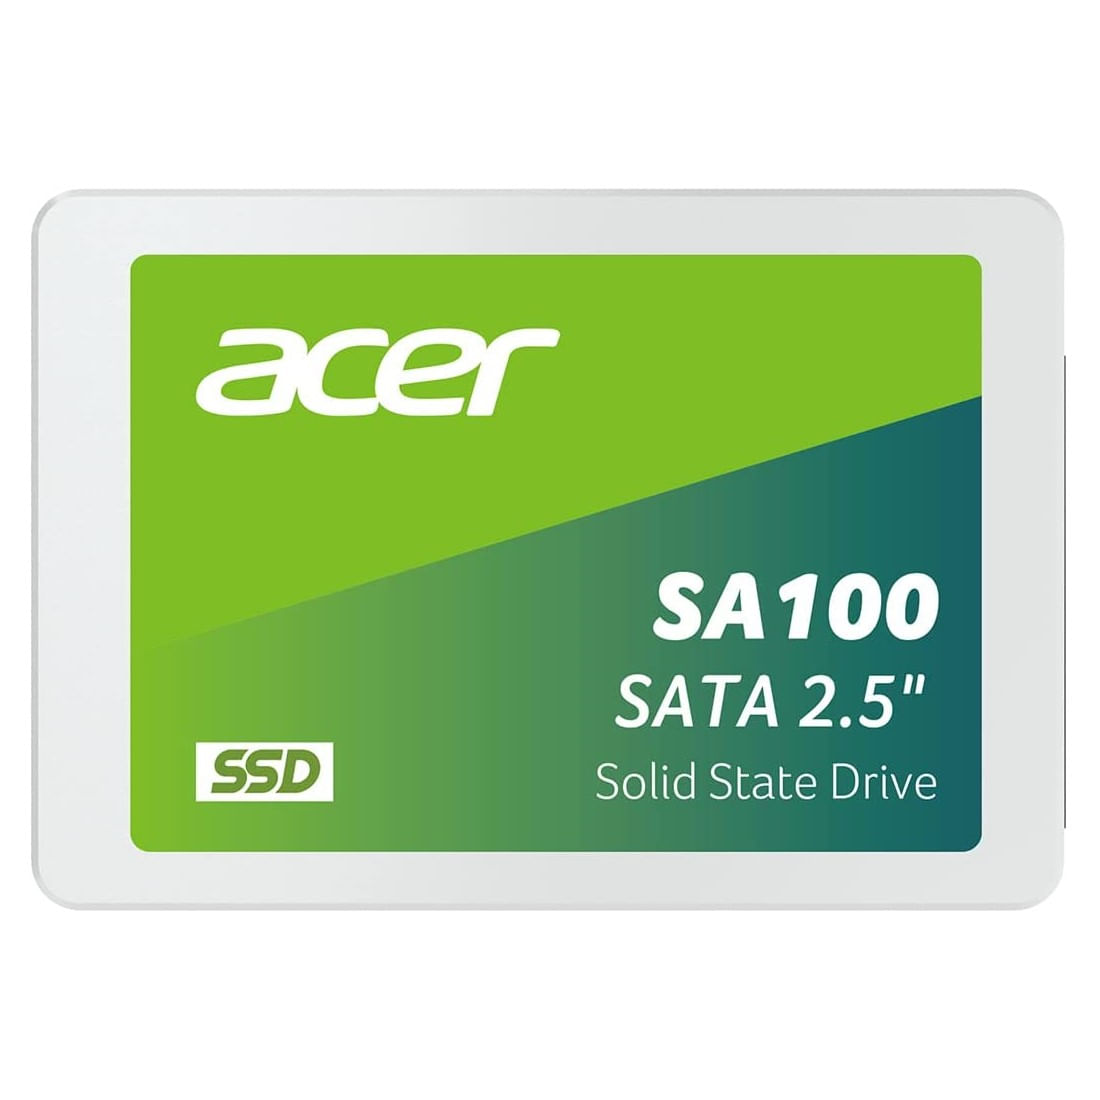 Acer Aspire F 15